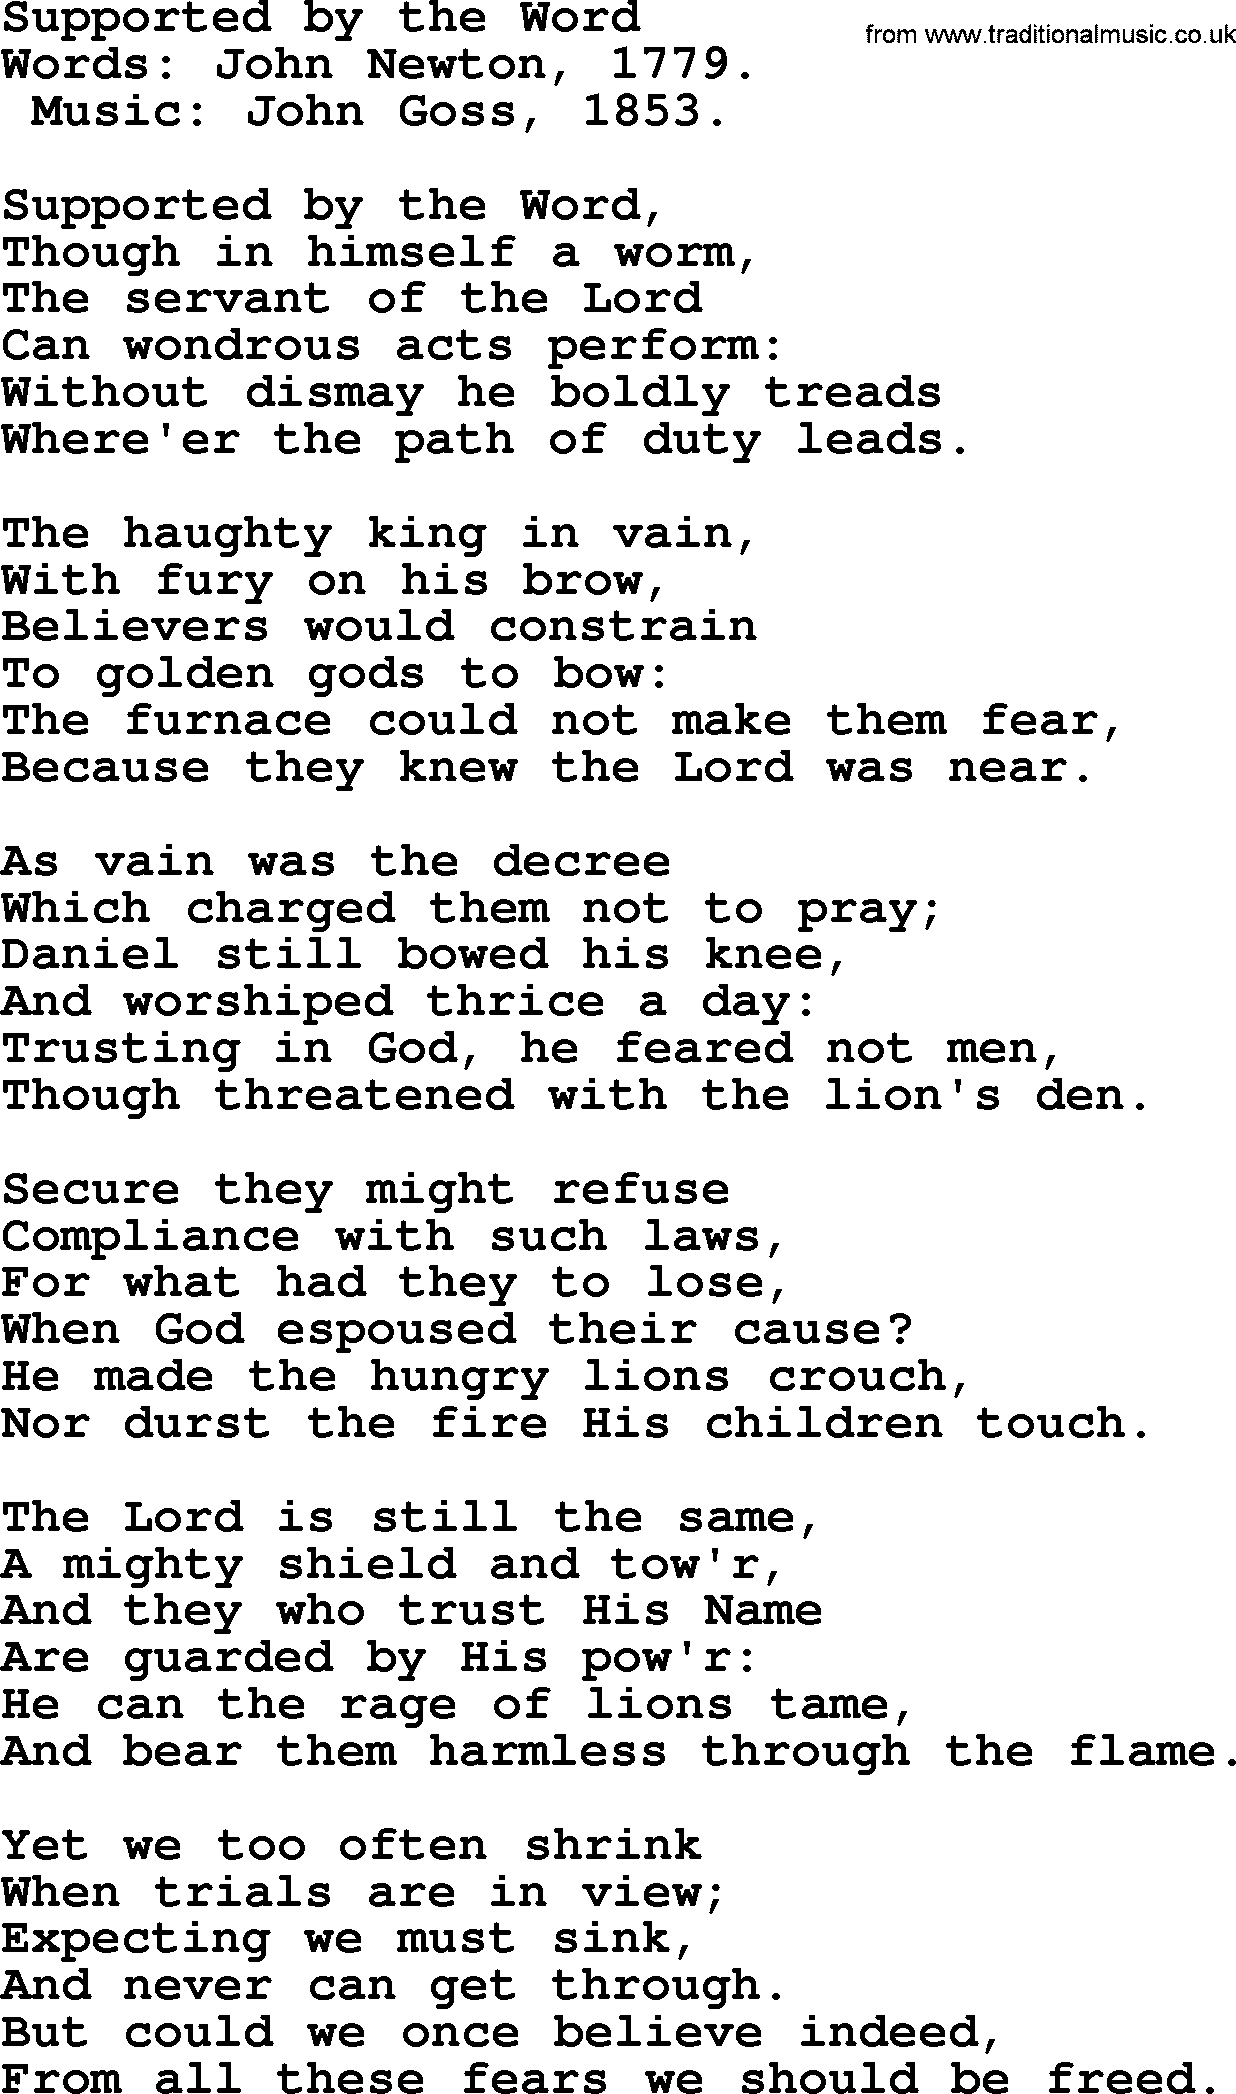 John Newton hymn: Supported By The Word, lyrics